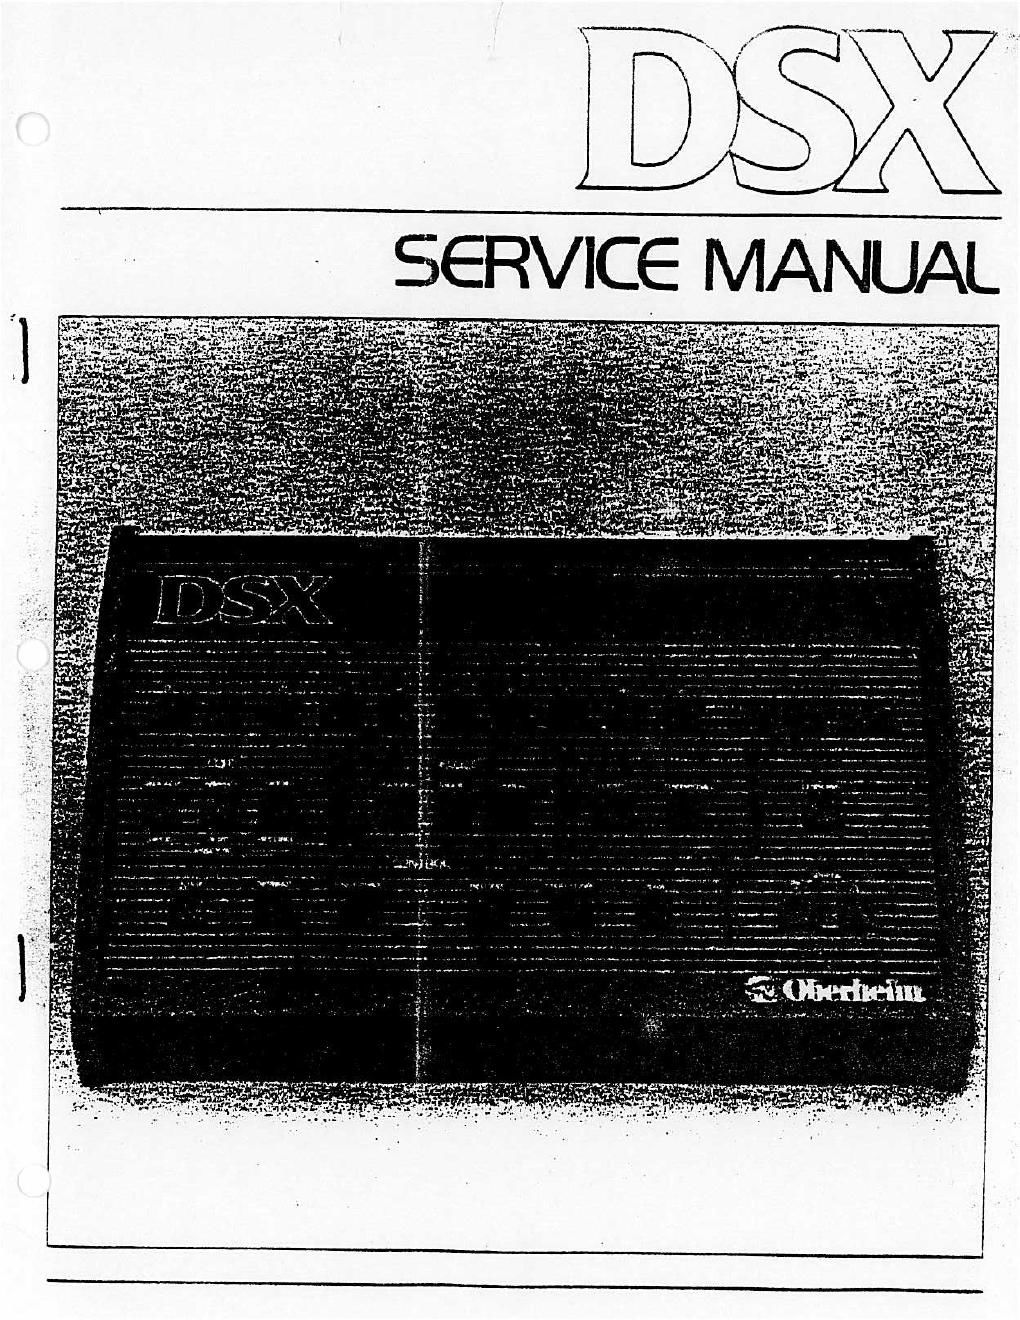 oberheim dsx service manual 2